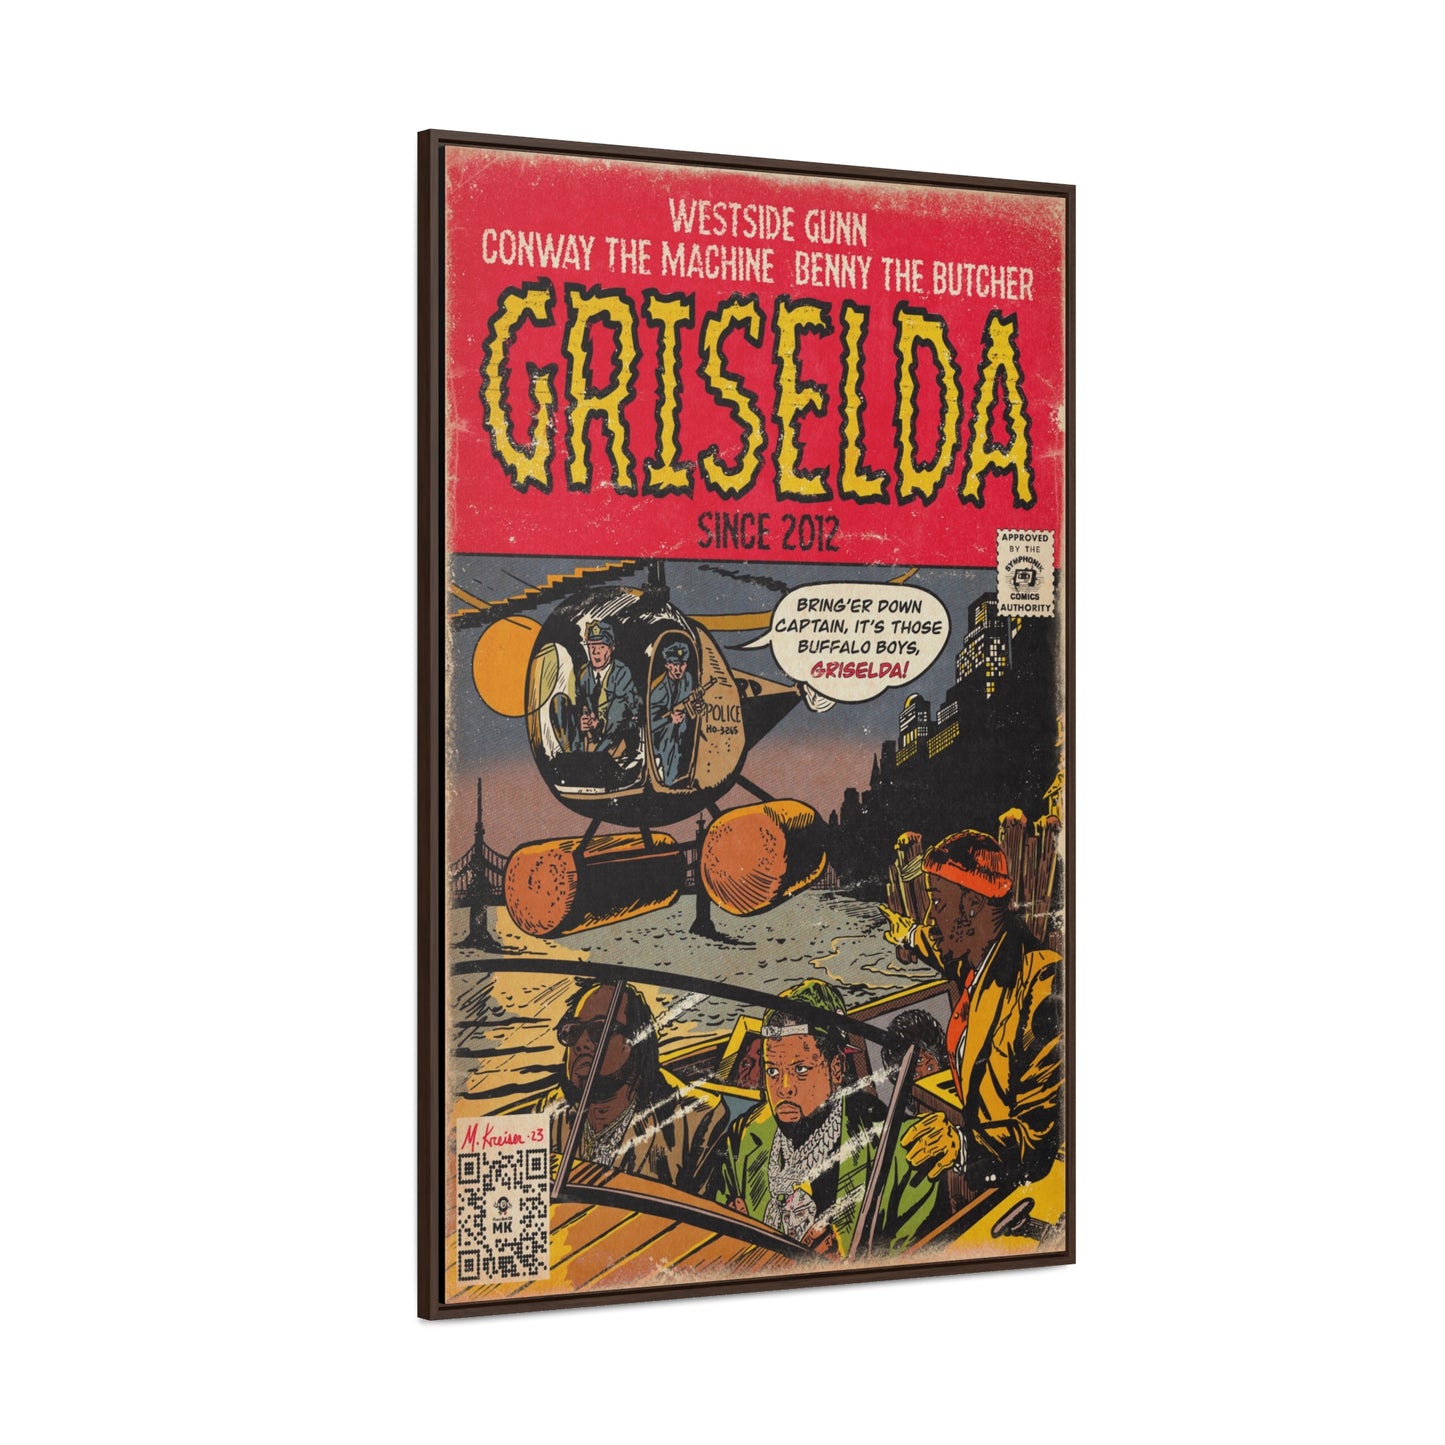 Griselda - Comic Book Art - Gallery Canvas Wraps, Vertical Frame